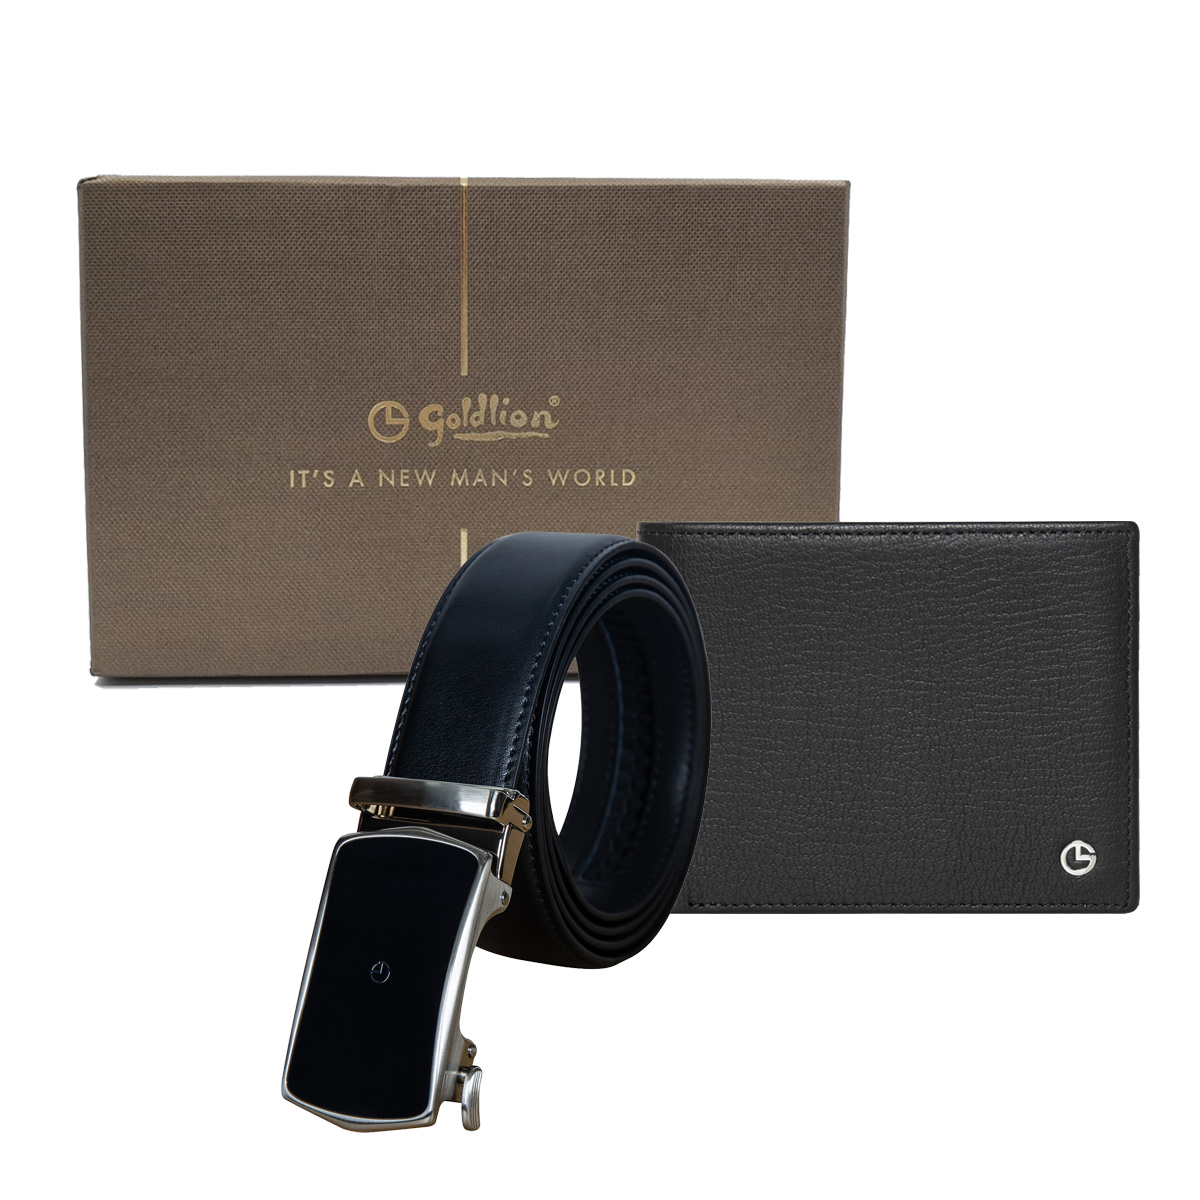 [Online Exclusive] Goldlion Genuine Leather 8 Cards Slot Wallet & Auto Lock Belt Gift Set